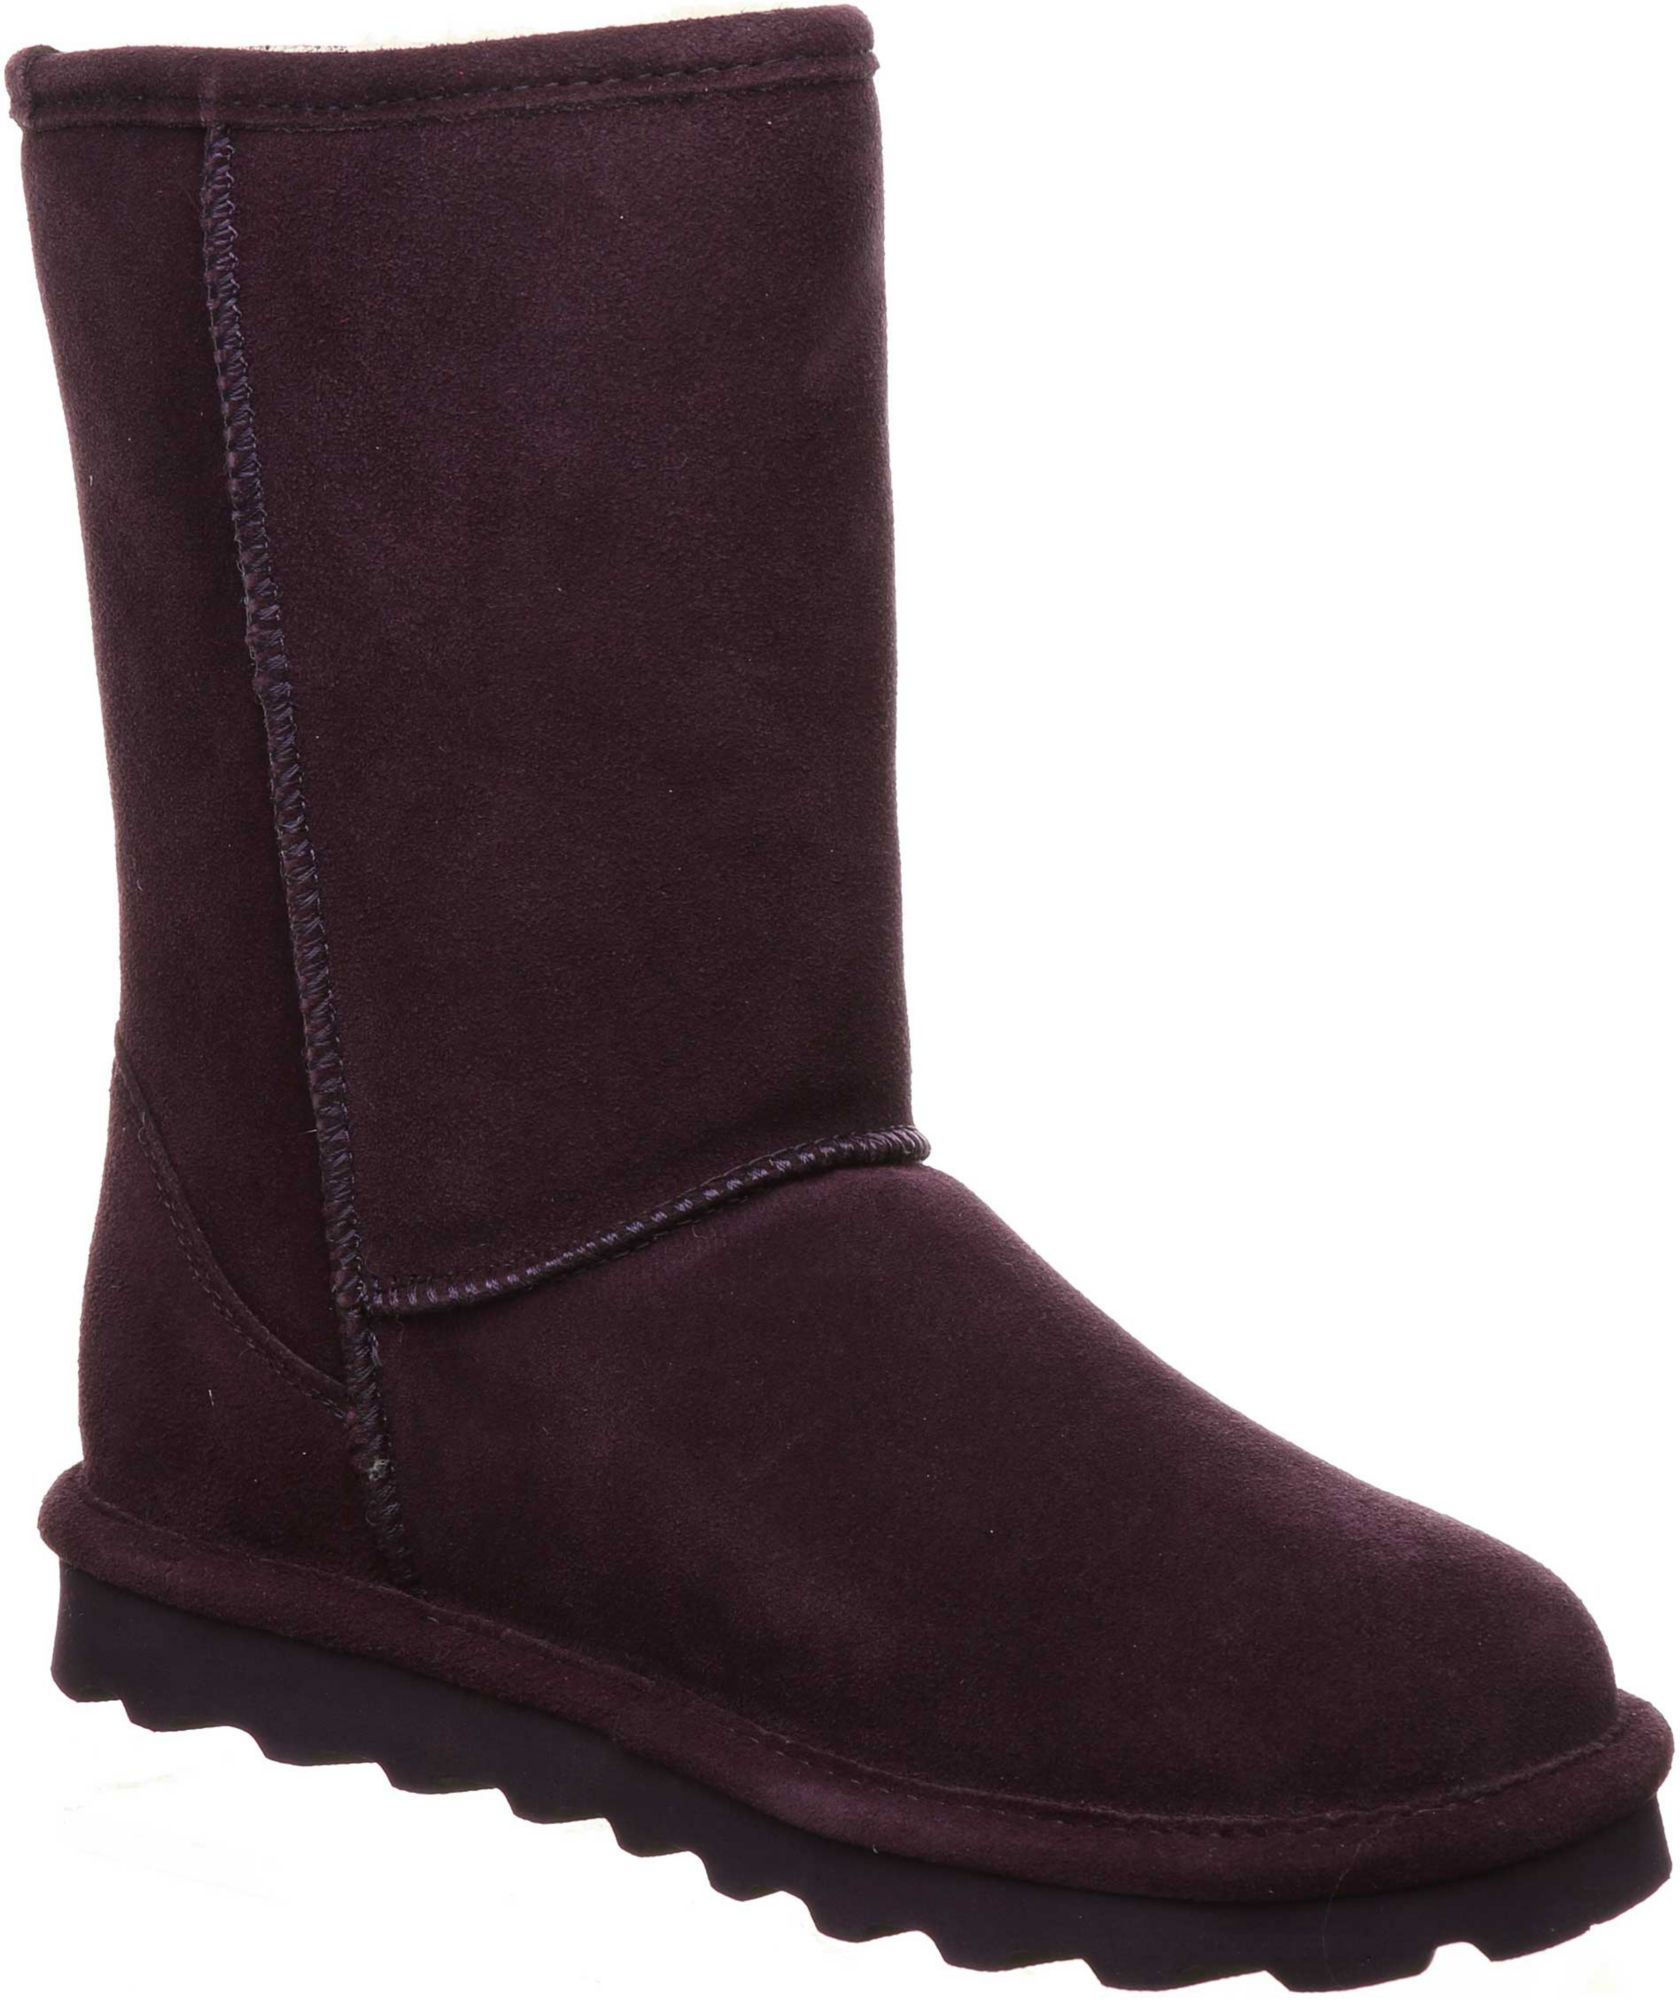 burgundy bearpaw boots